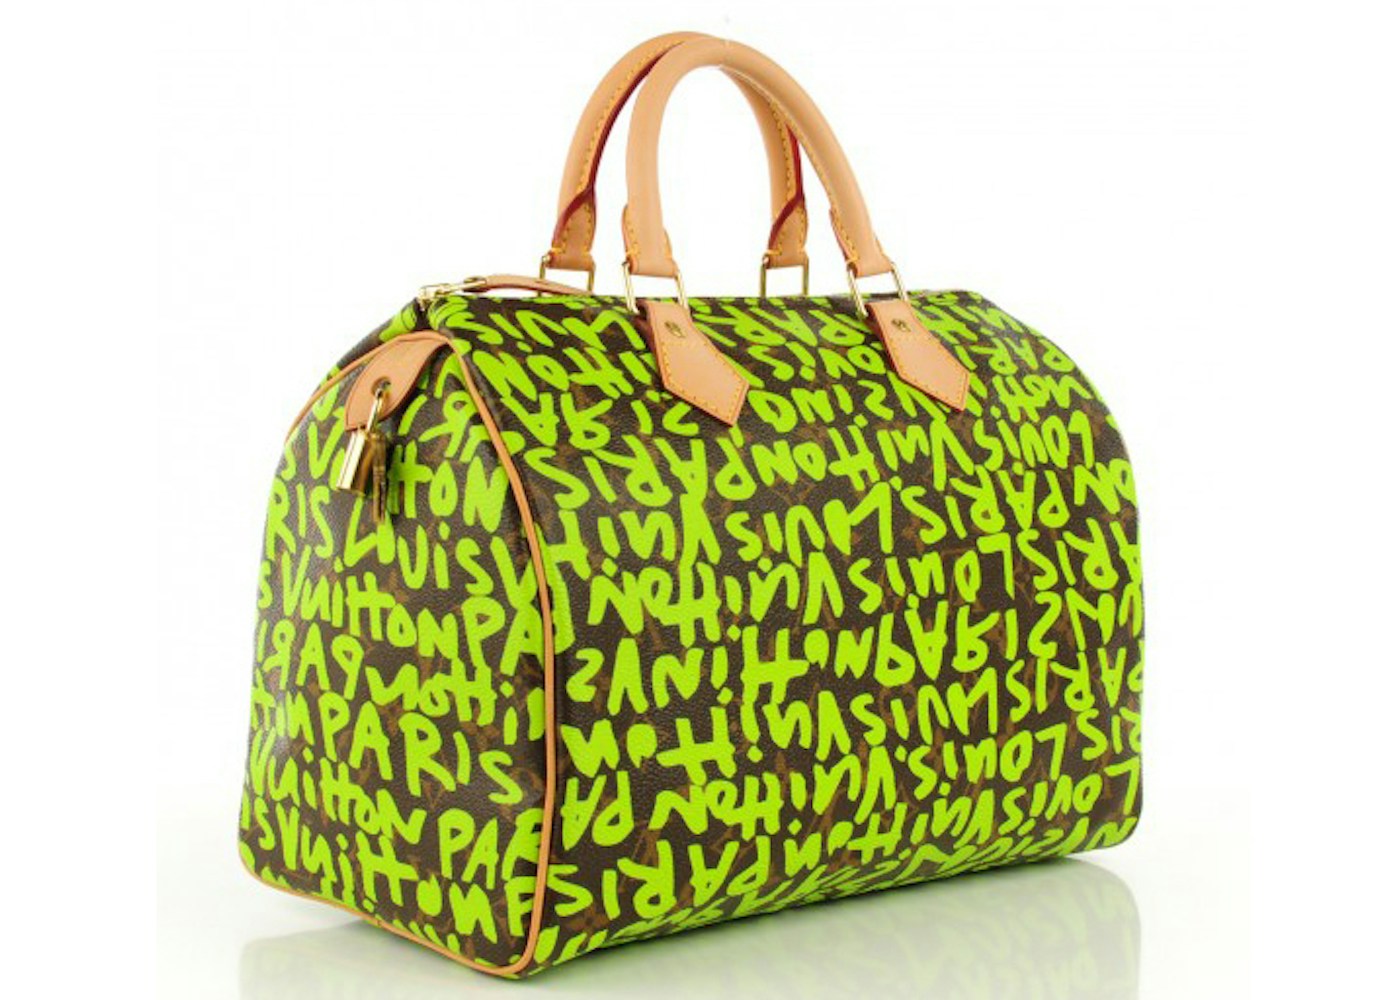 Louis Vuitton 2001 pre-owned Monogram Graffiti Speedy 30 Handbag